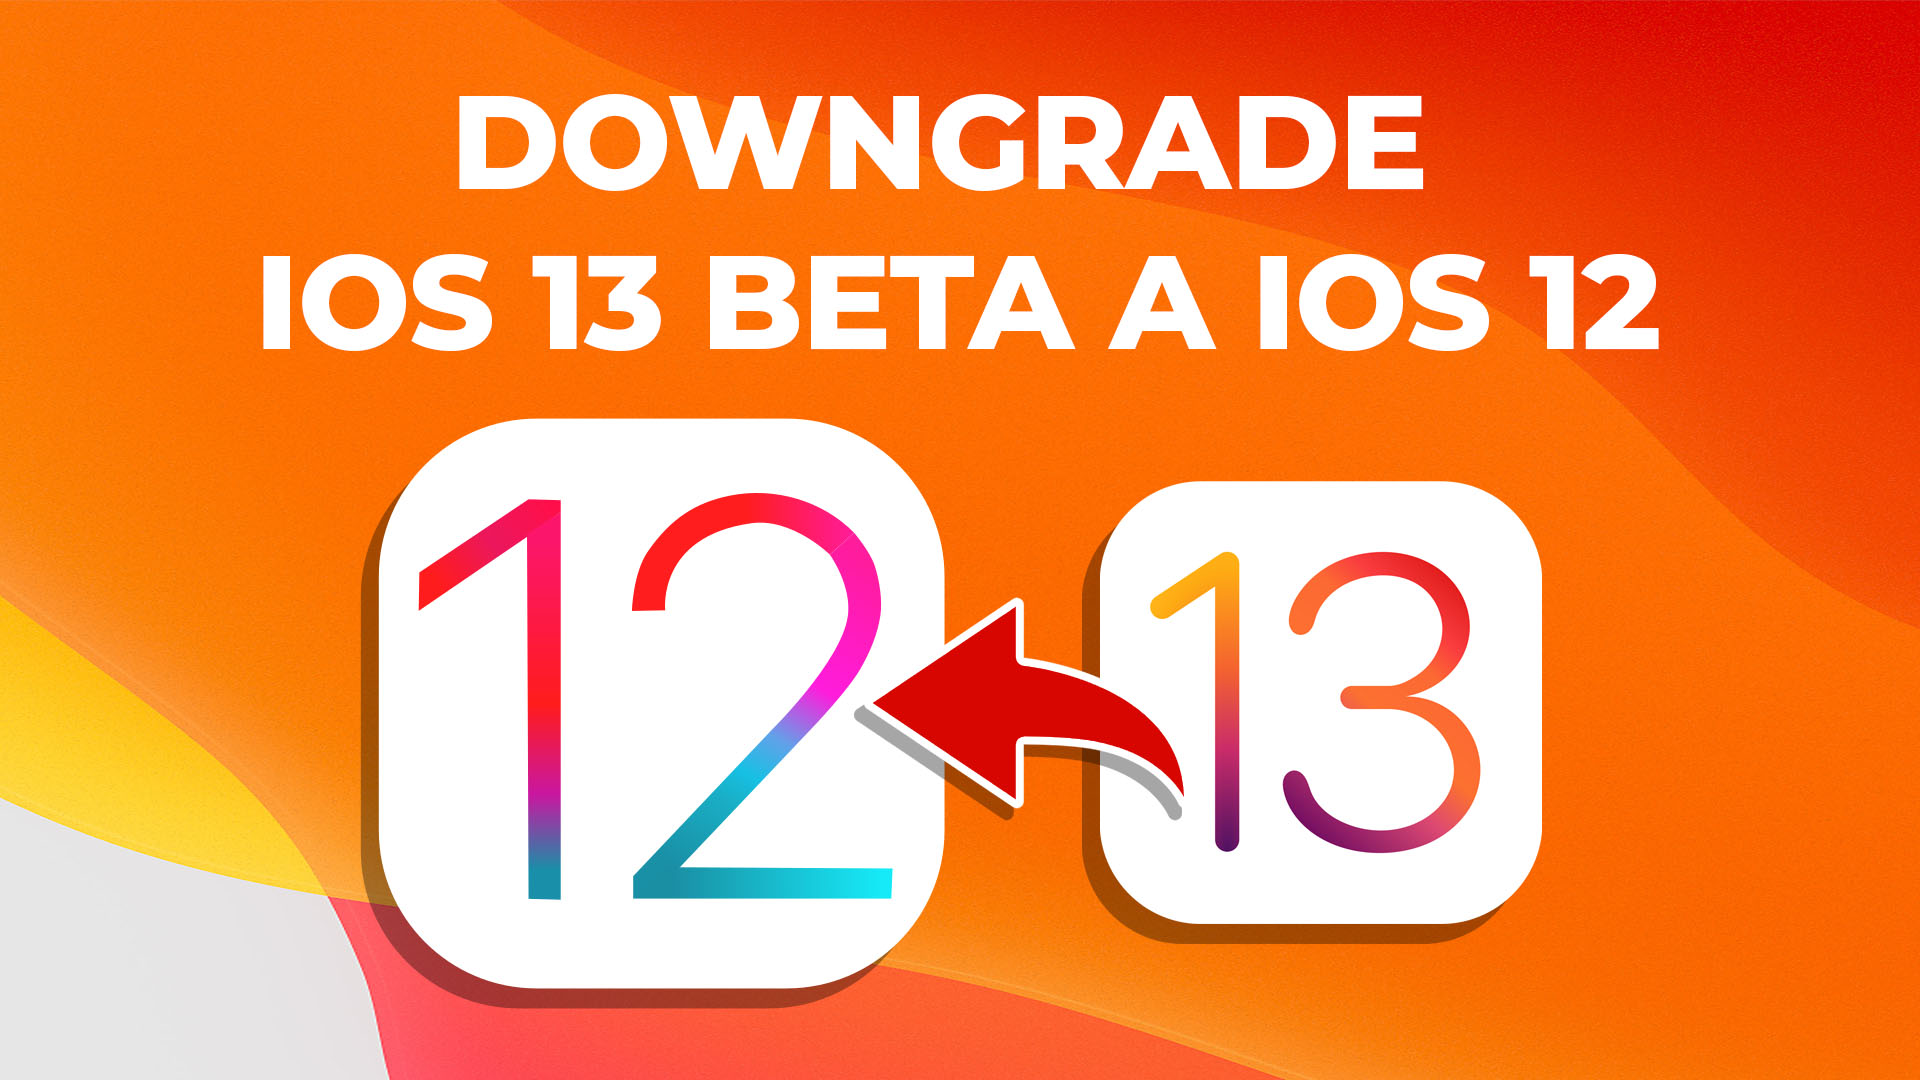 Downgrade-di-iOS-13-Beta-a-iOS-12